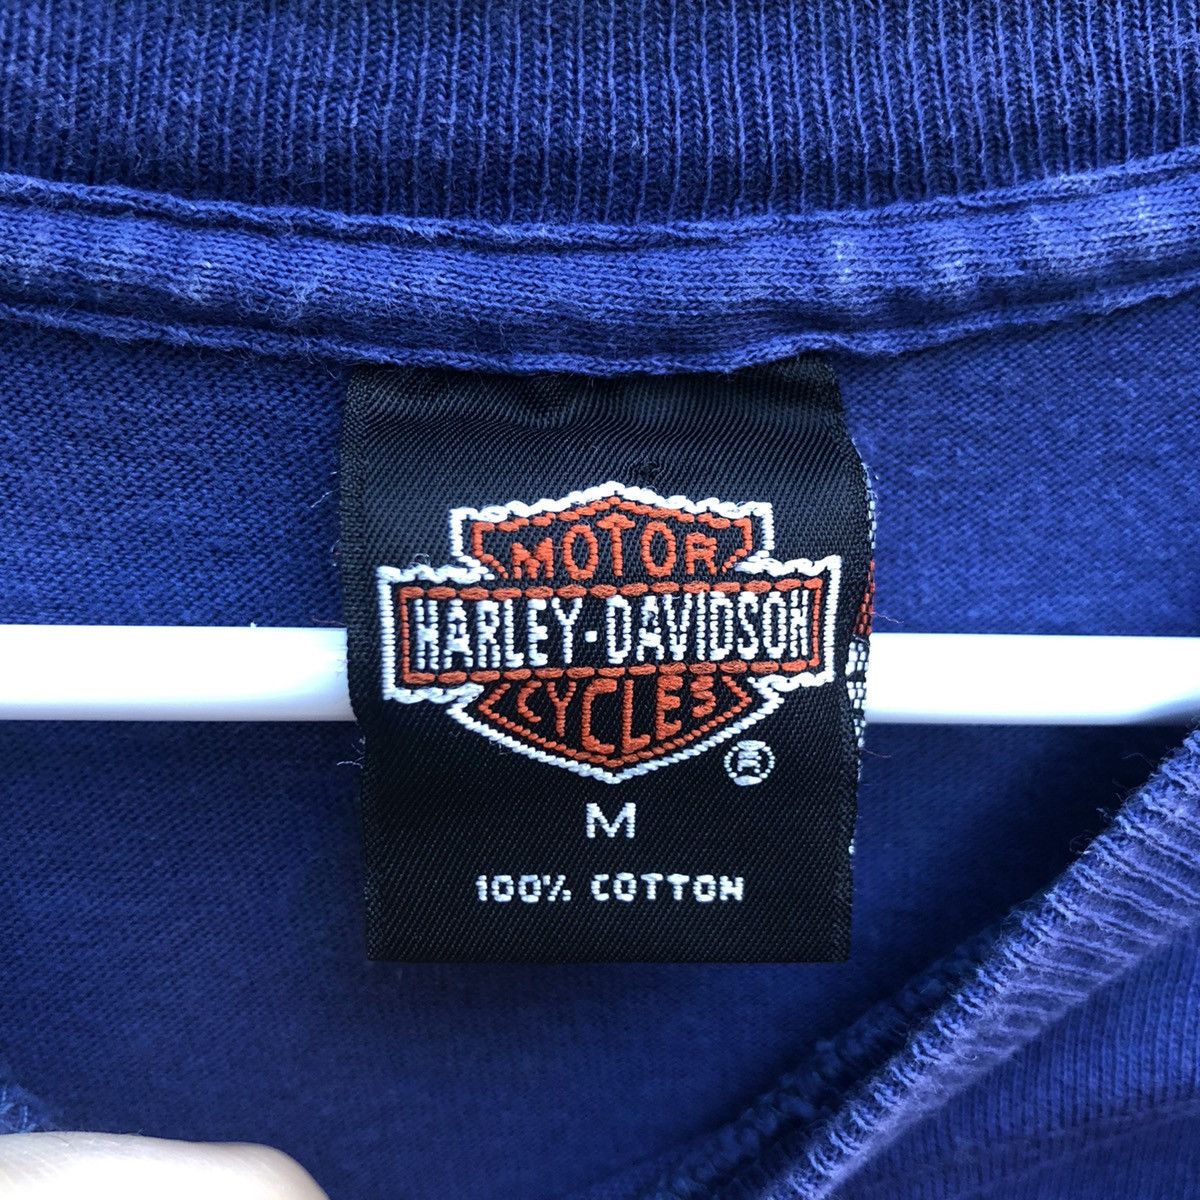 Harley Davidson vintage 1994 HARLEY American Freedom Machine tee shirt M Size US M / EU 48-50 / 2 - 4 Thumbnail